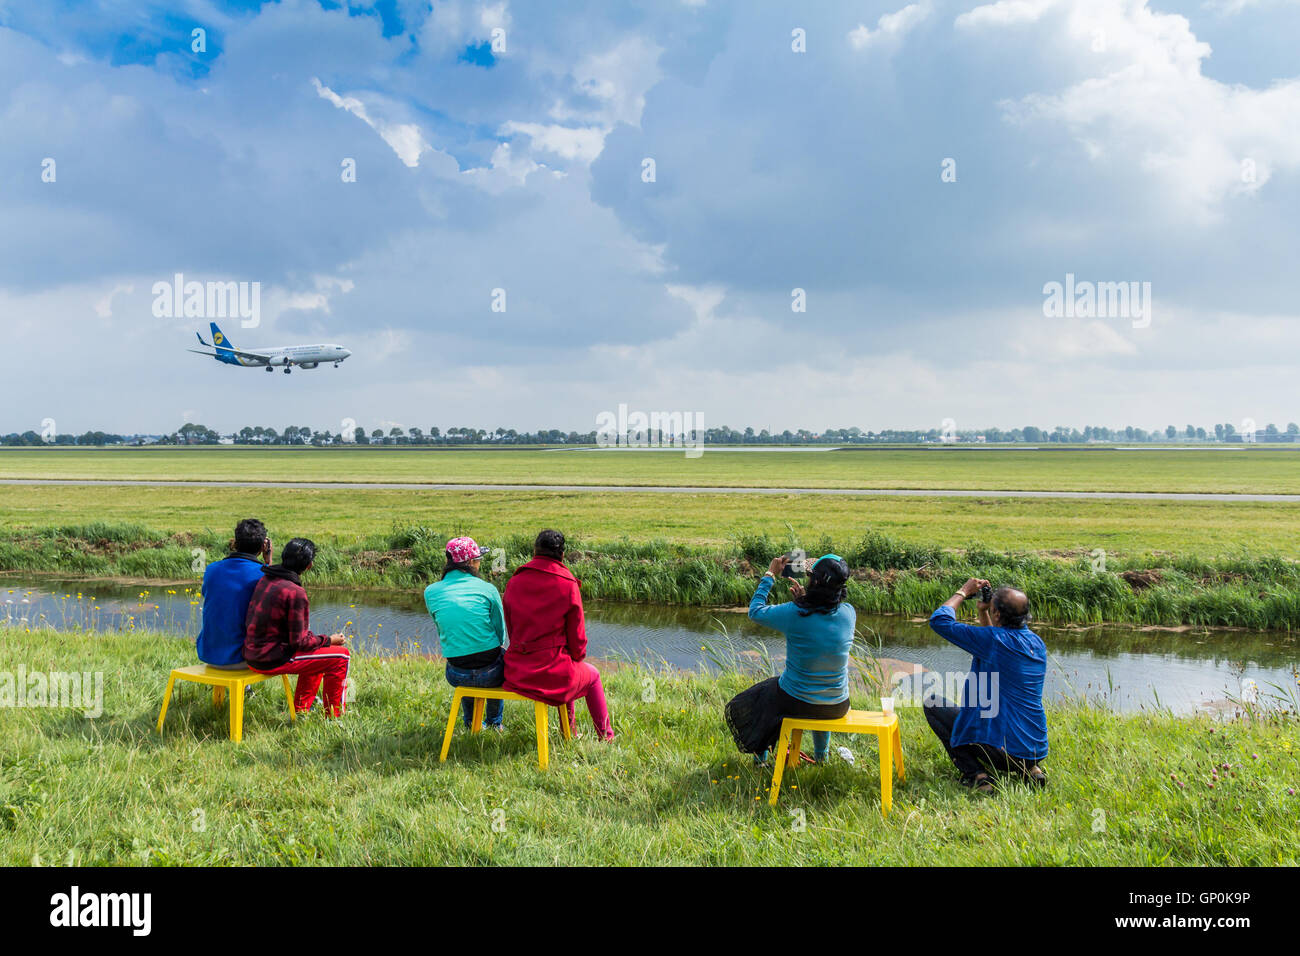 Polderbaan Vijfhuizen, the Netherlands - August 20, 2016: family of plane spotters watching passenger jet land Stock Photo